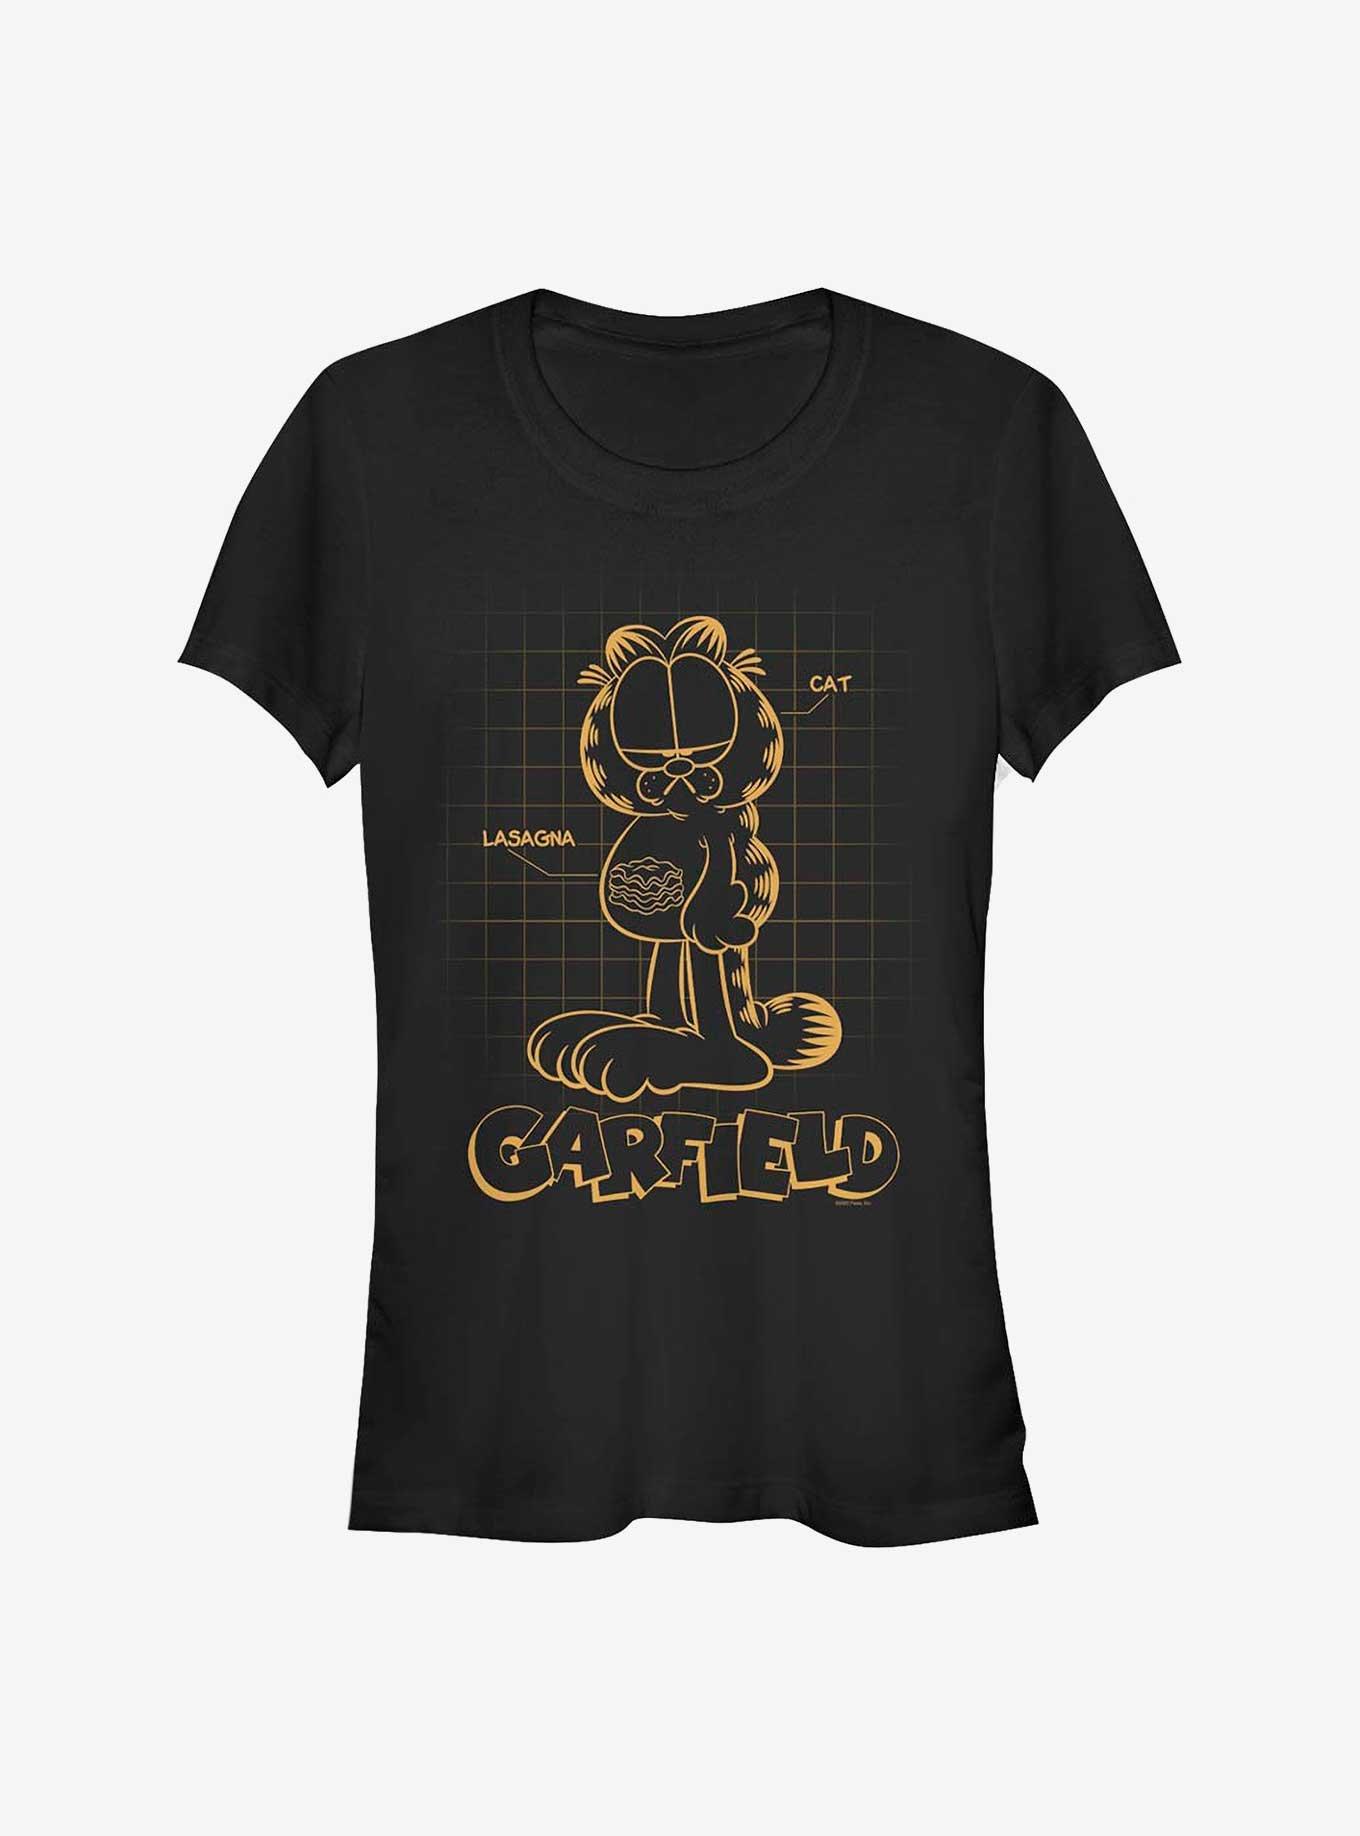 Garfield Cat Schematic Girls T-Shirt, BLACK, hi-res